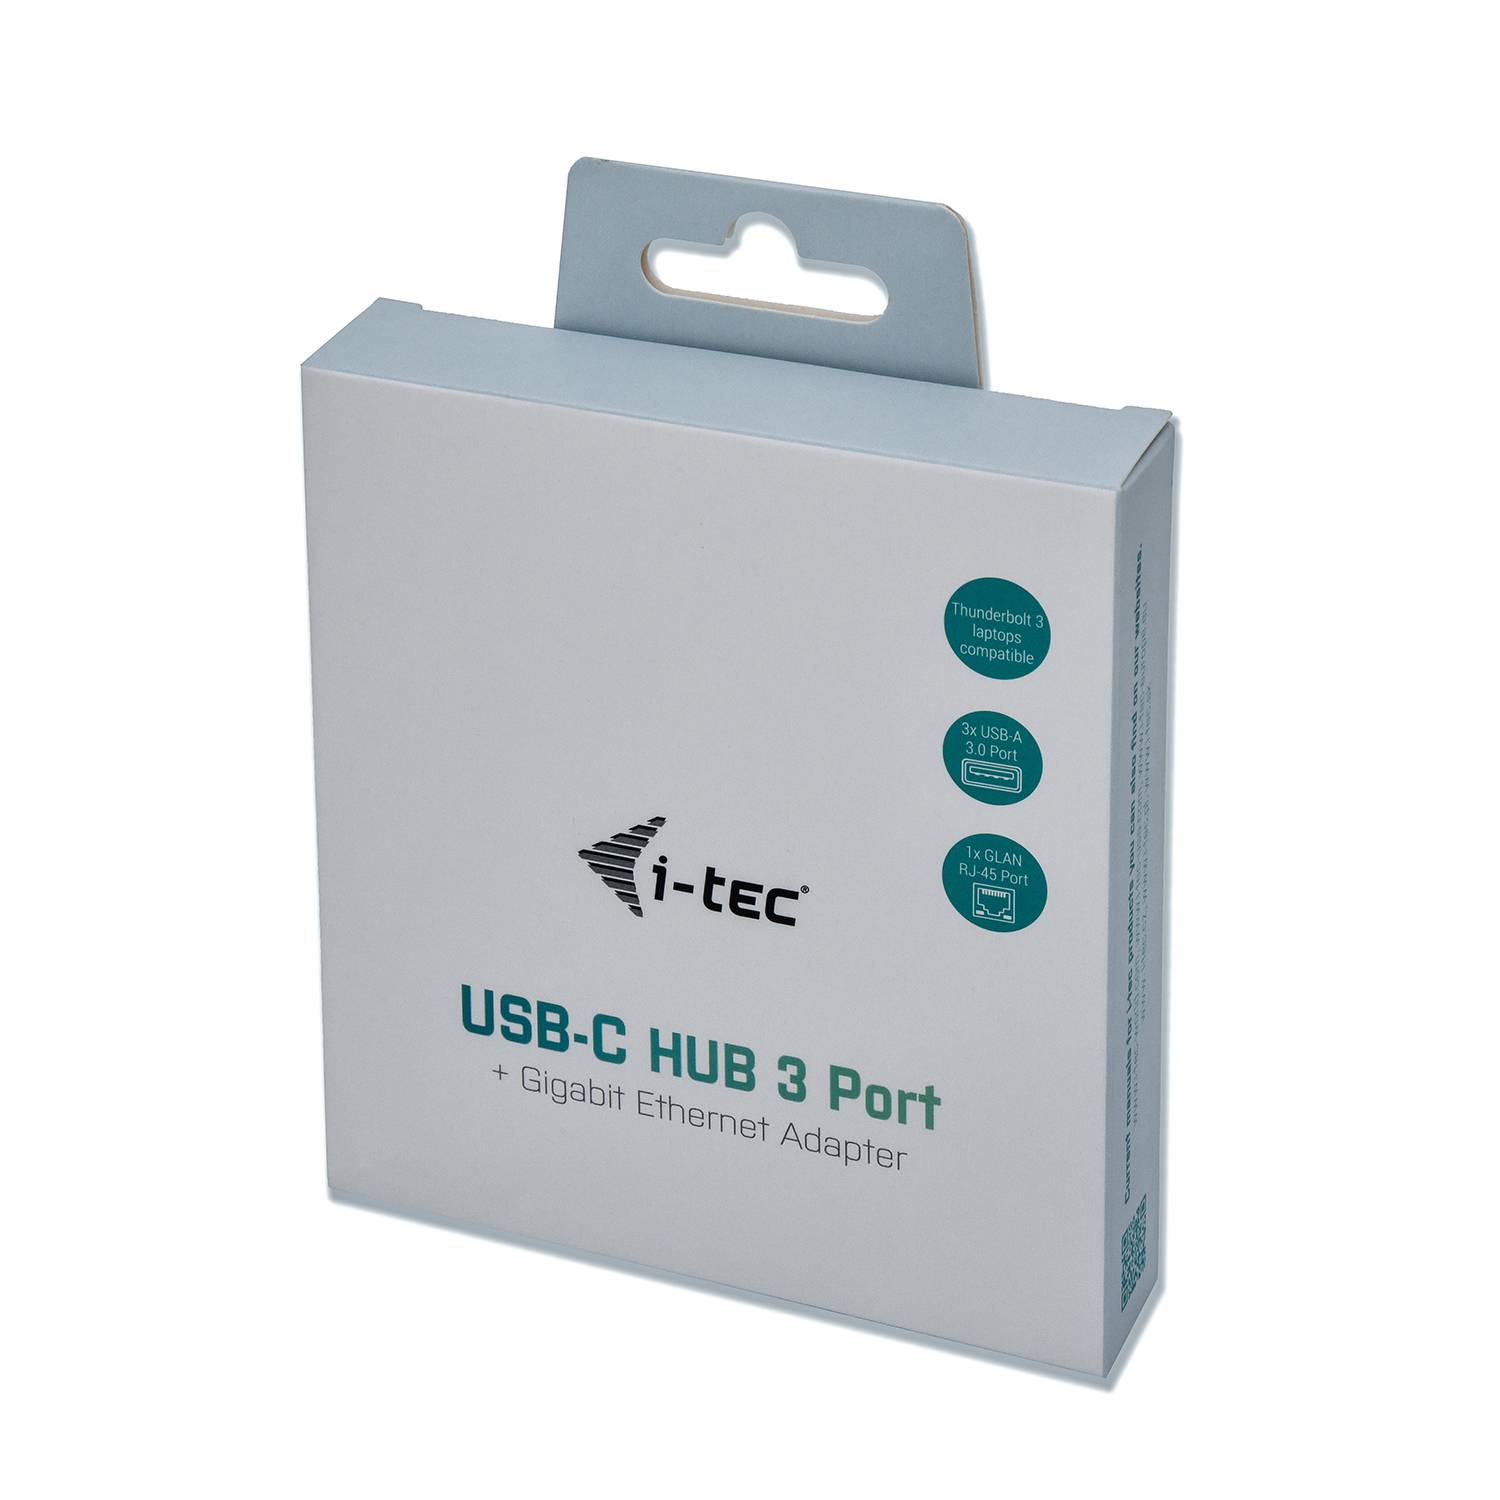 Rca Informatique - image du produit : I-TEC USB-C METAL HUB 3 + GLAN 3 PORT HUB + ETHERNET ADAPTER